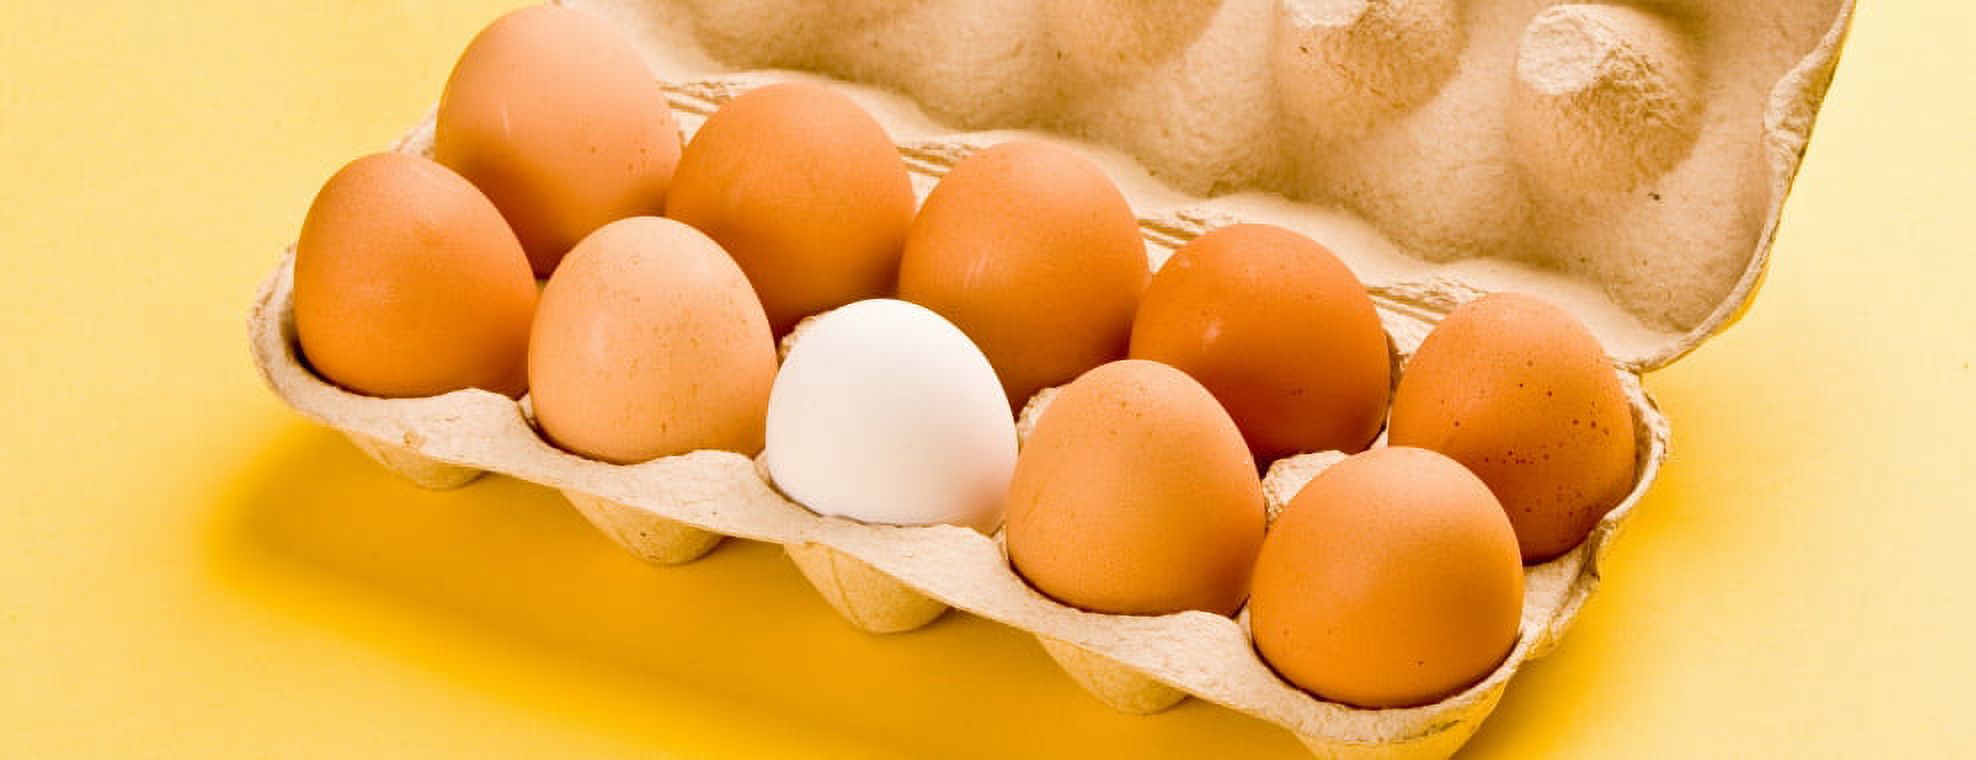 Sunside Farms Sunnyside Large Eggs, 12 Count